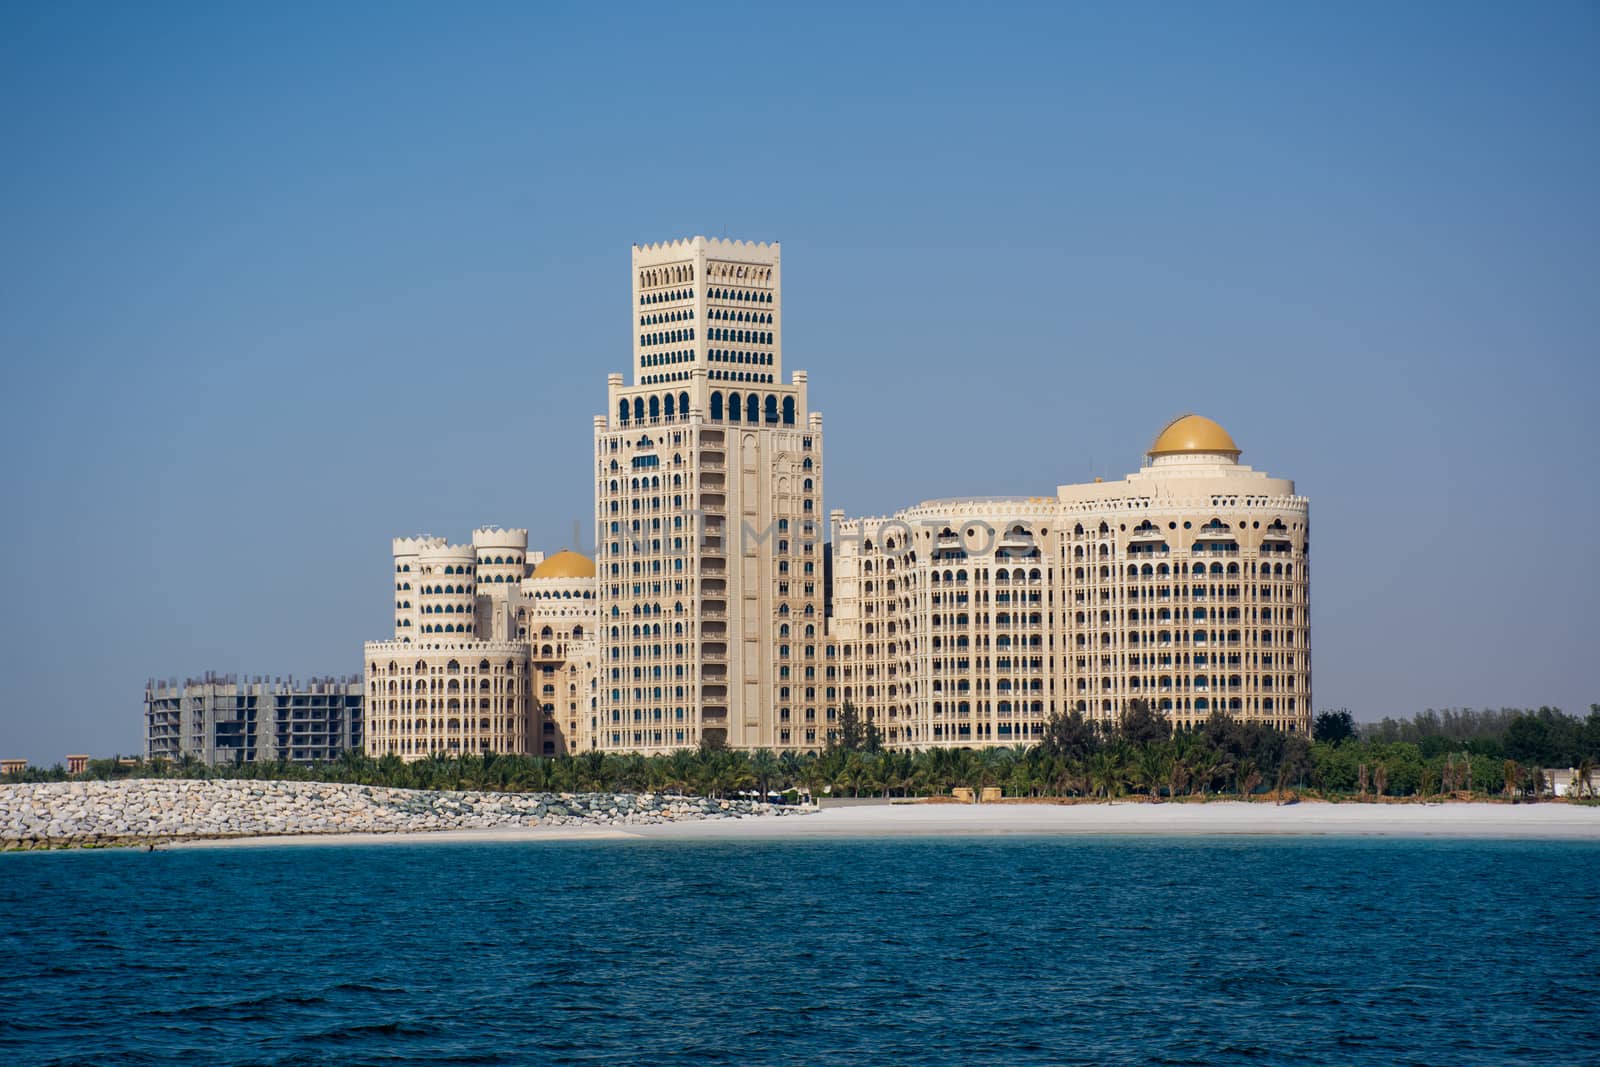 Waldorf Astoria in Ras al Khaimah, United Arab Emirates (UAE) wi by kingmaphotos